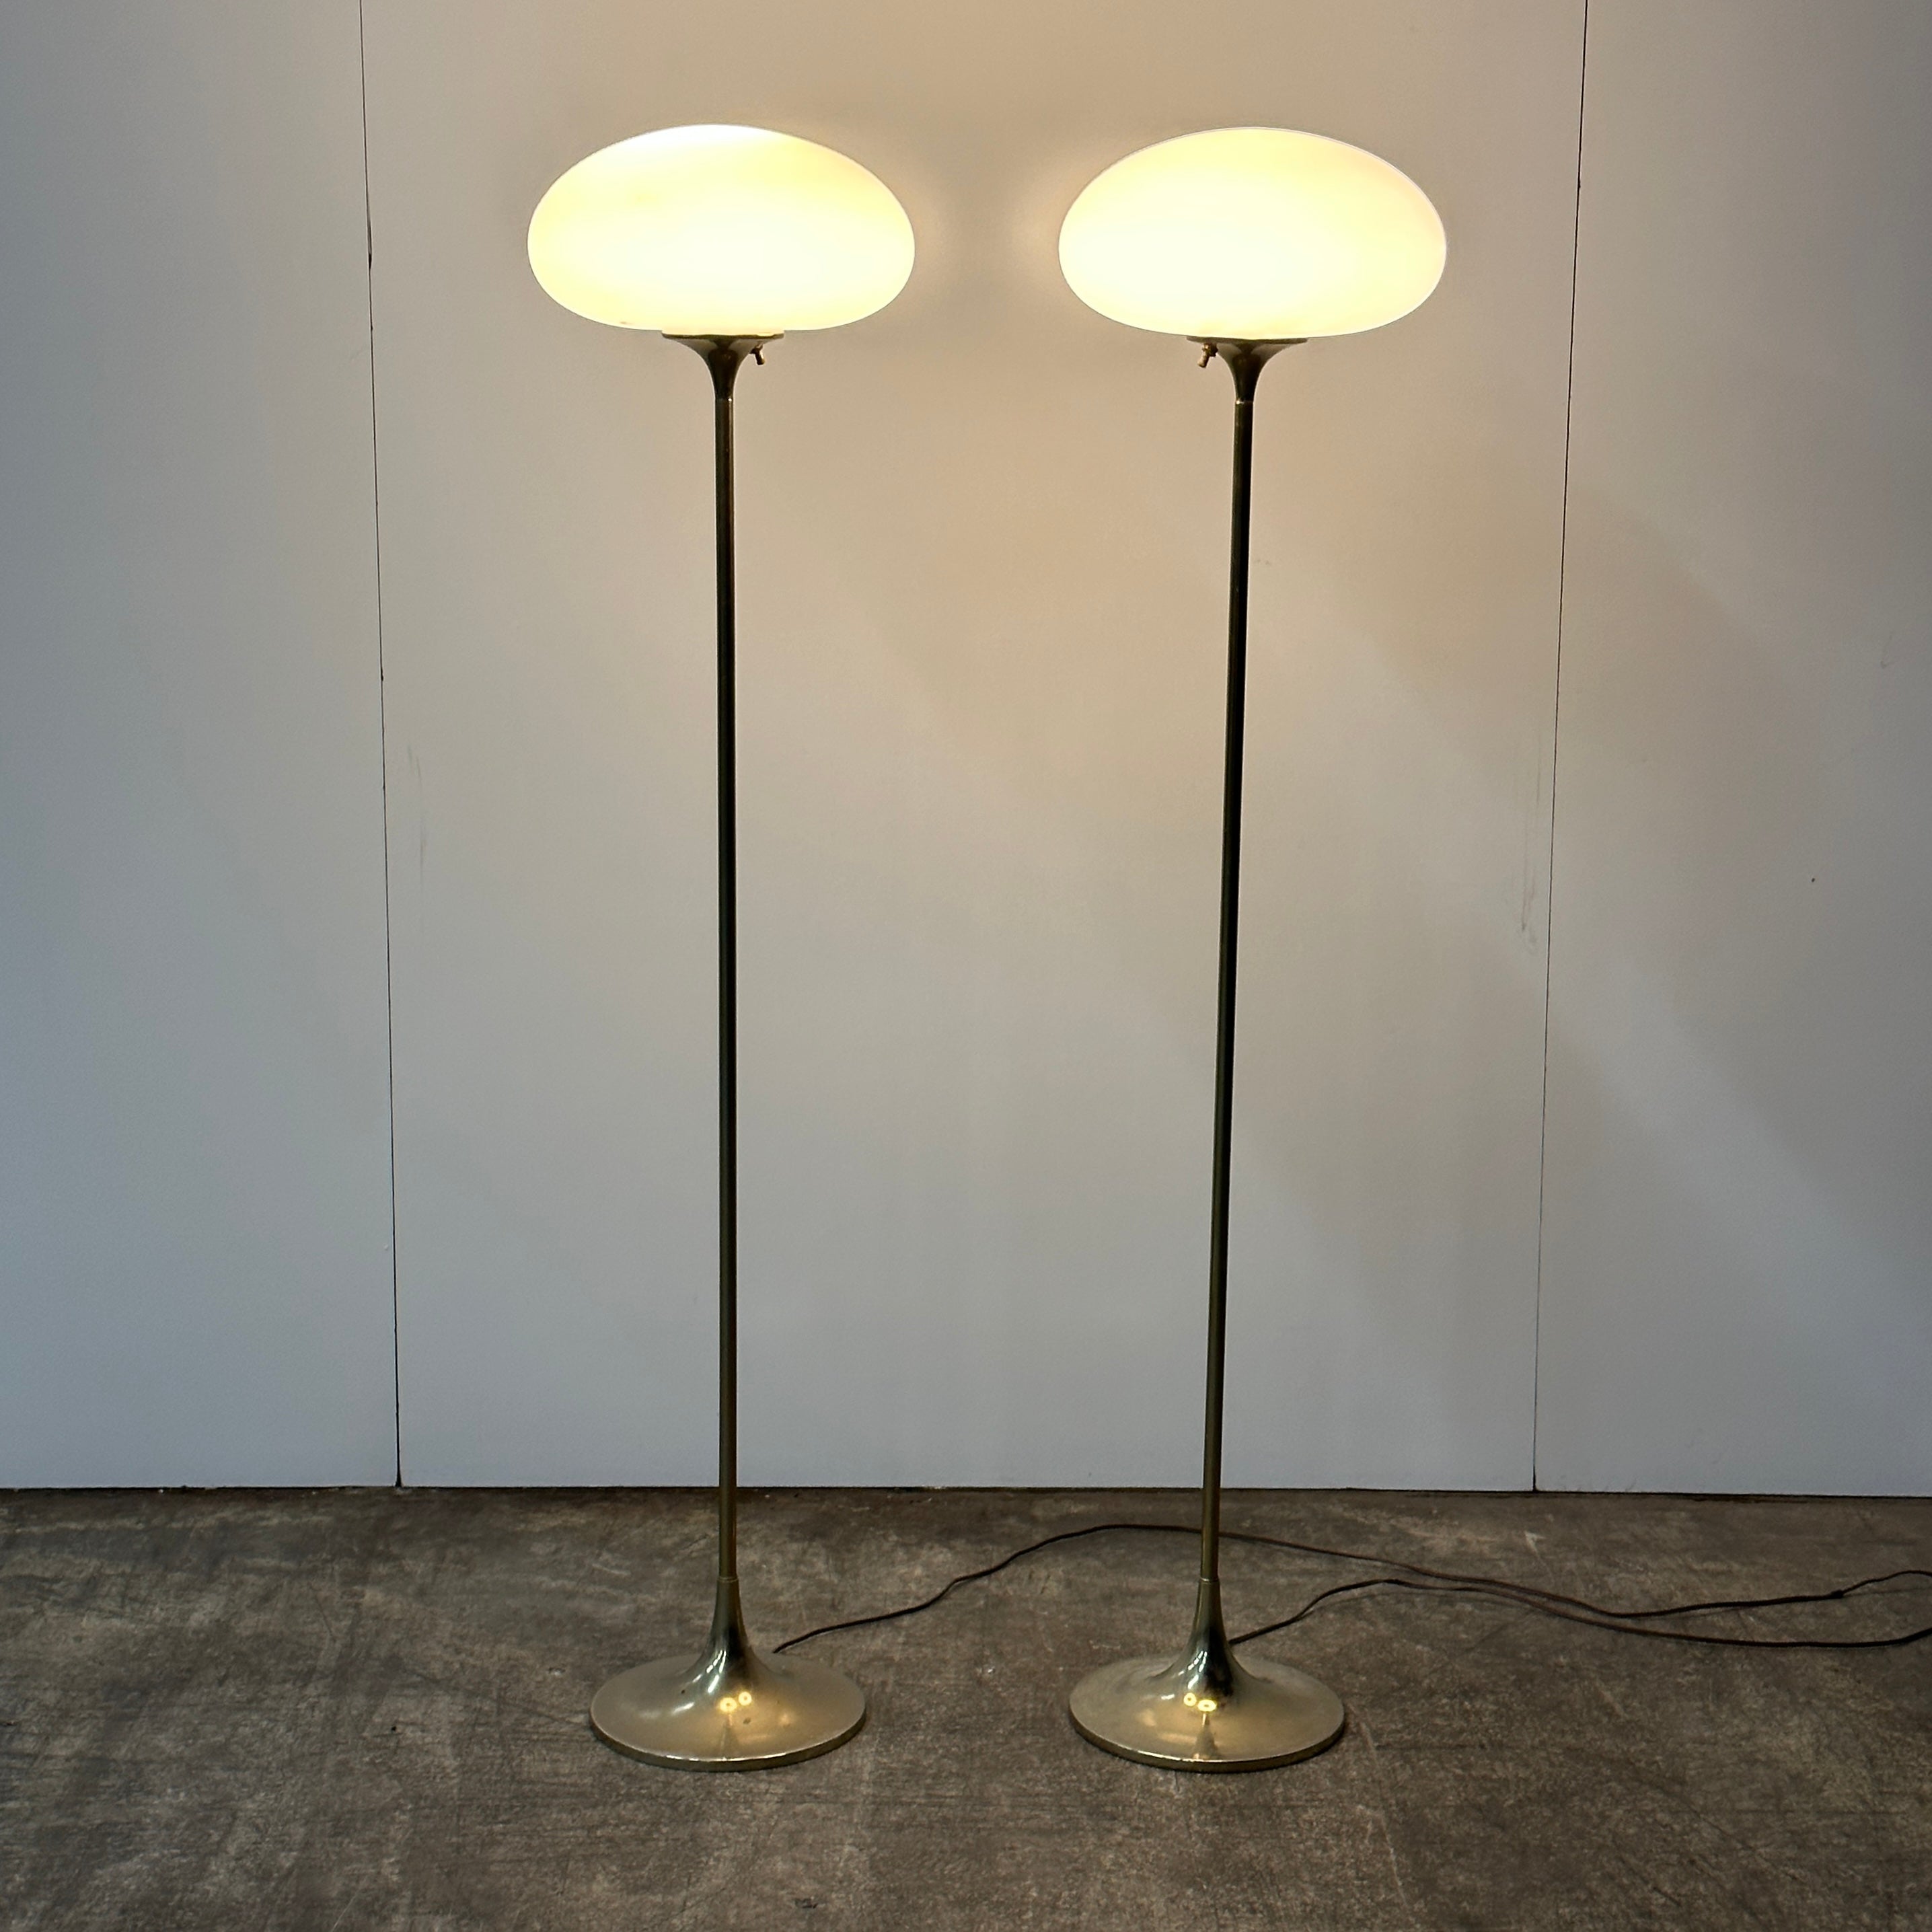 Pair of Mushroom Lamps by Laurel